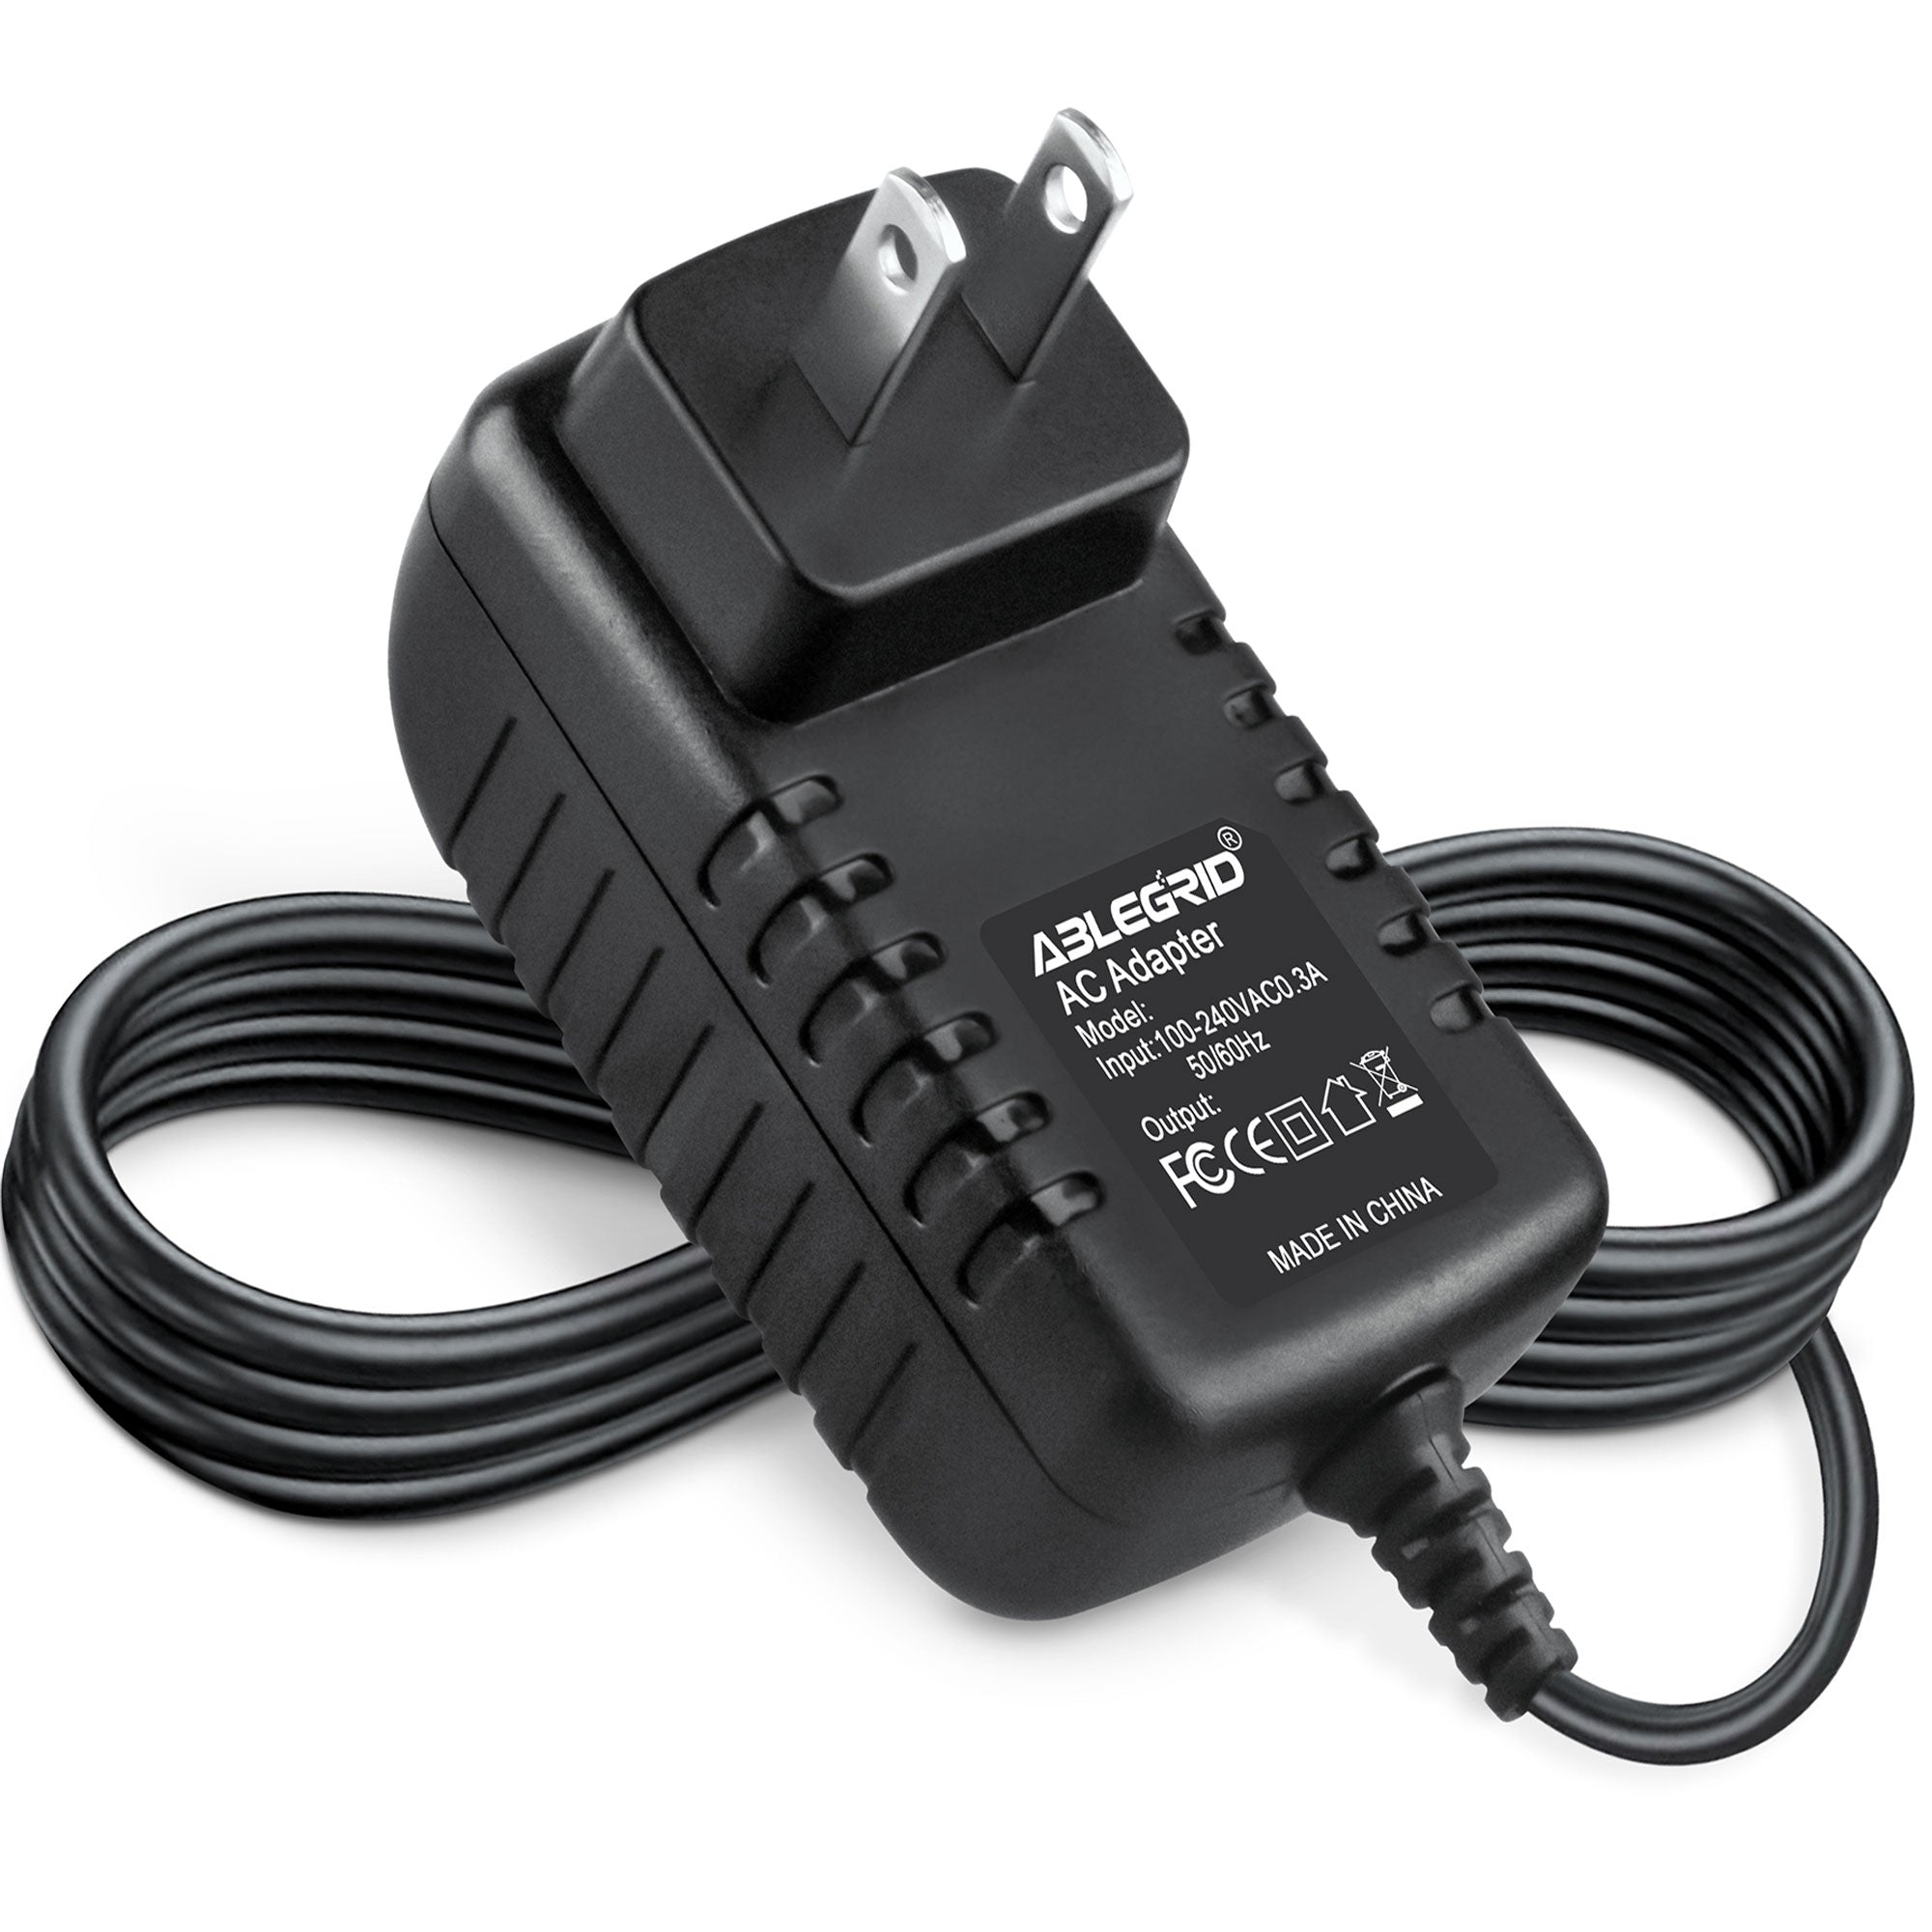 AbleGrid AC Adapter for DURACELL DIGITAL VOICE 500 WATT POWERPACK INVERTER PP500 Charger